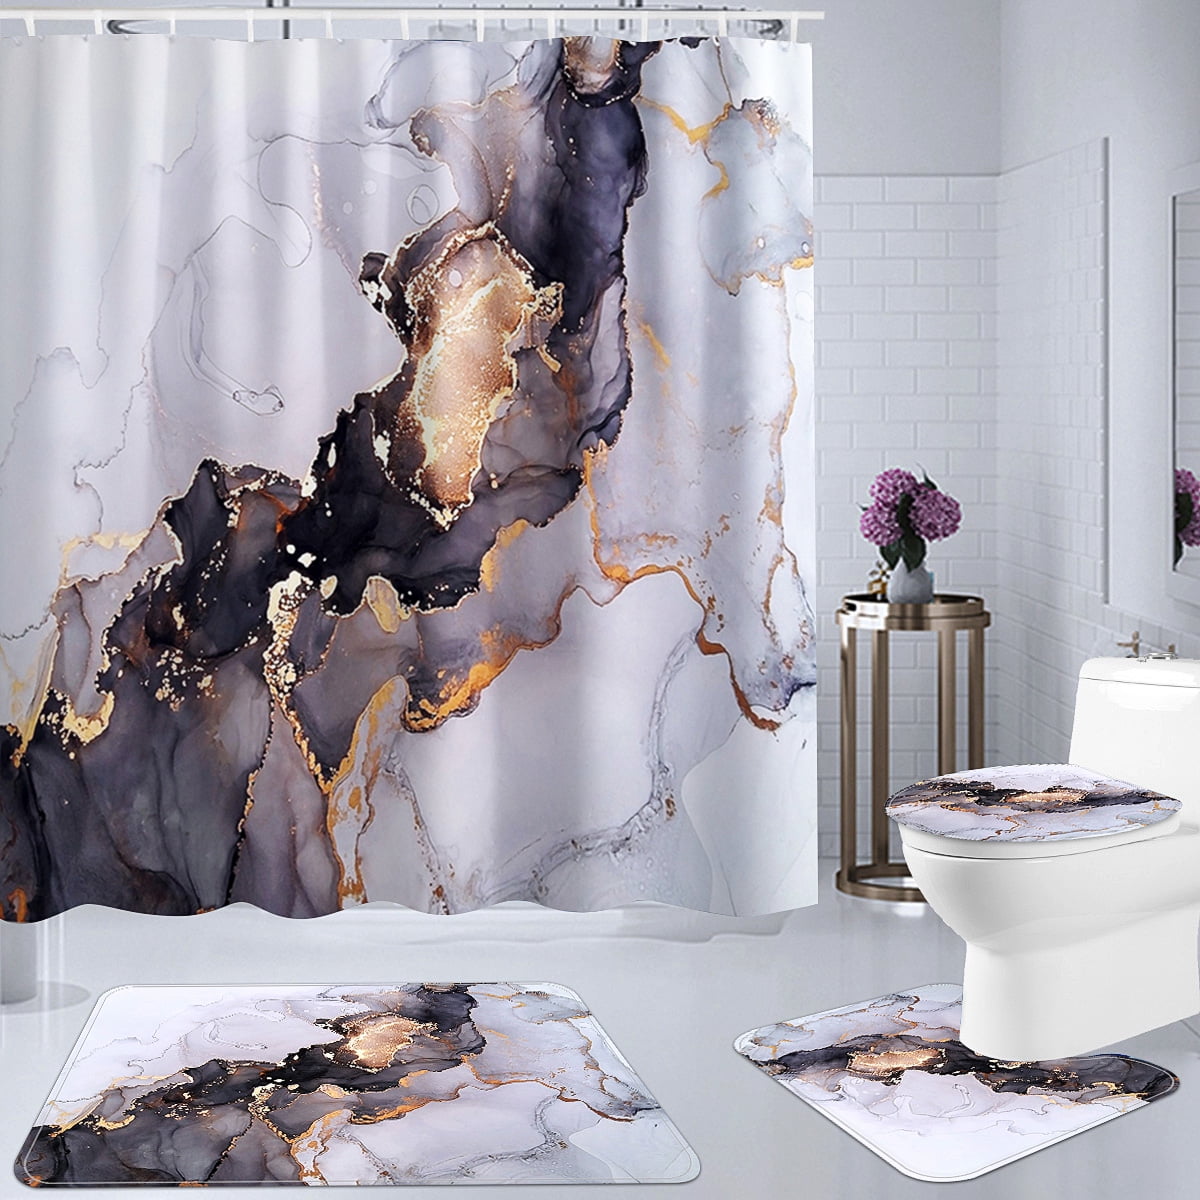 Details about   Bathroom Waterproof Shower Curtain Toilet Lid Cover Bath Mat Set Home Hotel 